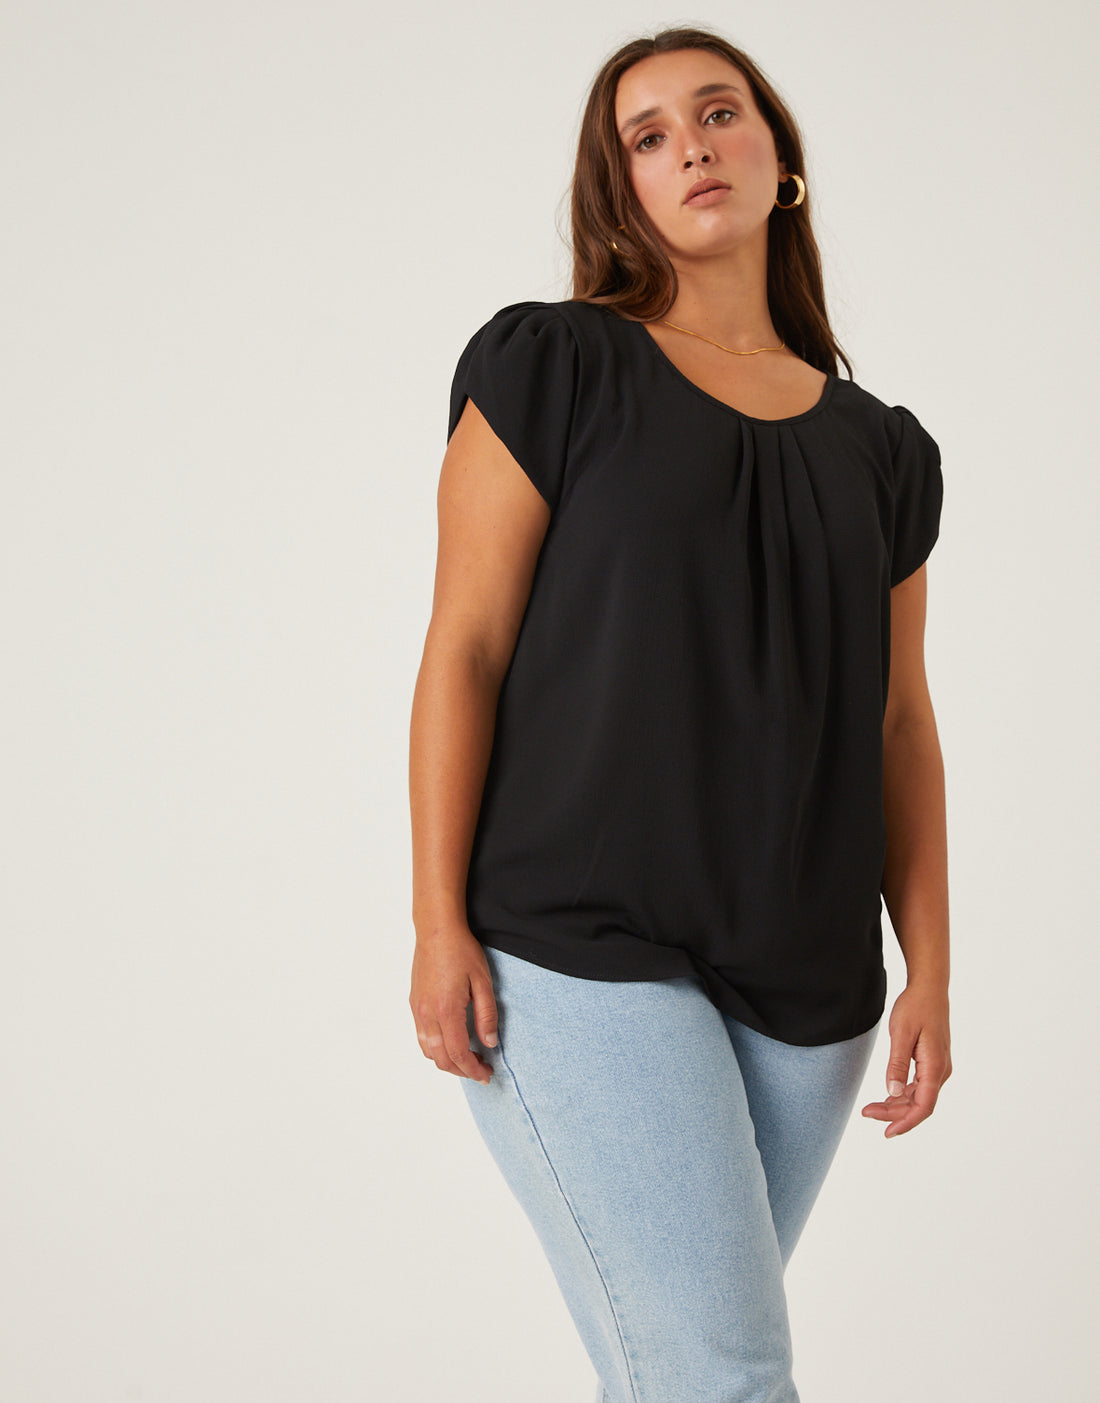 Curve Crinkle Cap Sleeve Blouse Plus Size Tops Black 1XL -2020AVE